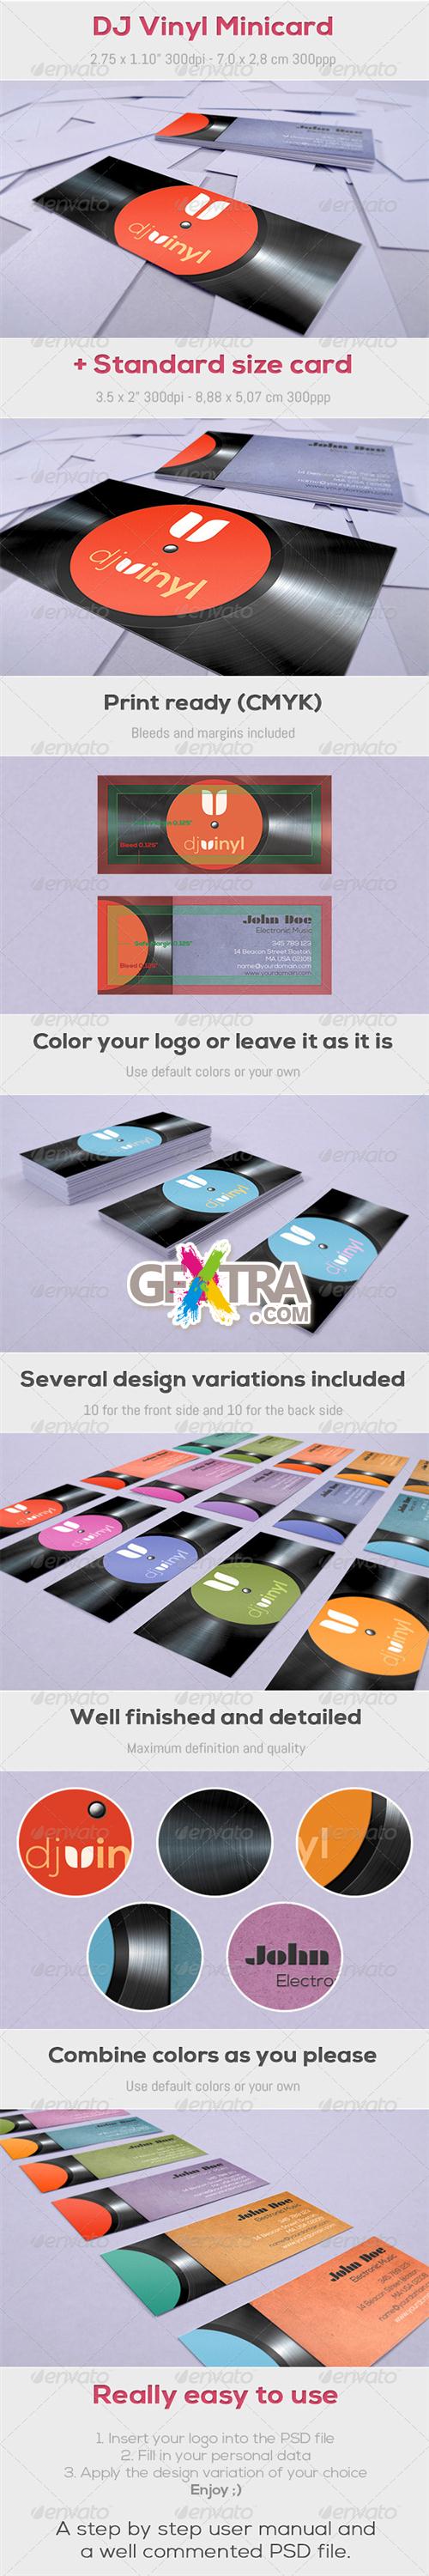 GraphicRiver - DJ Vinyl Minicard + Standard size card